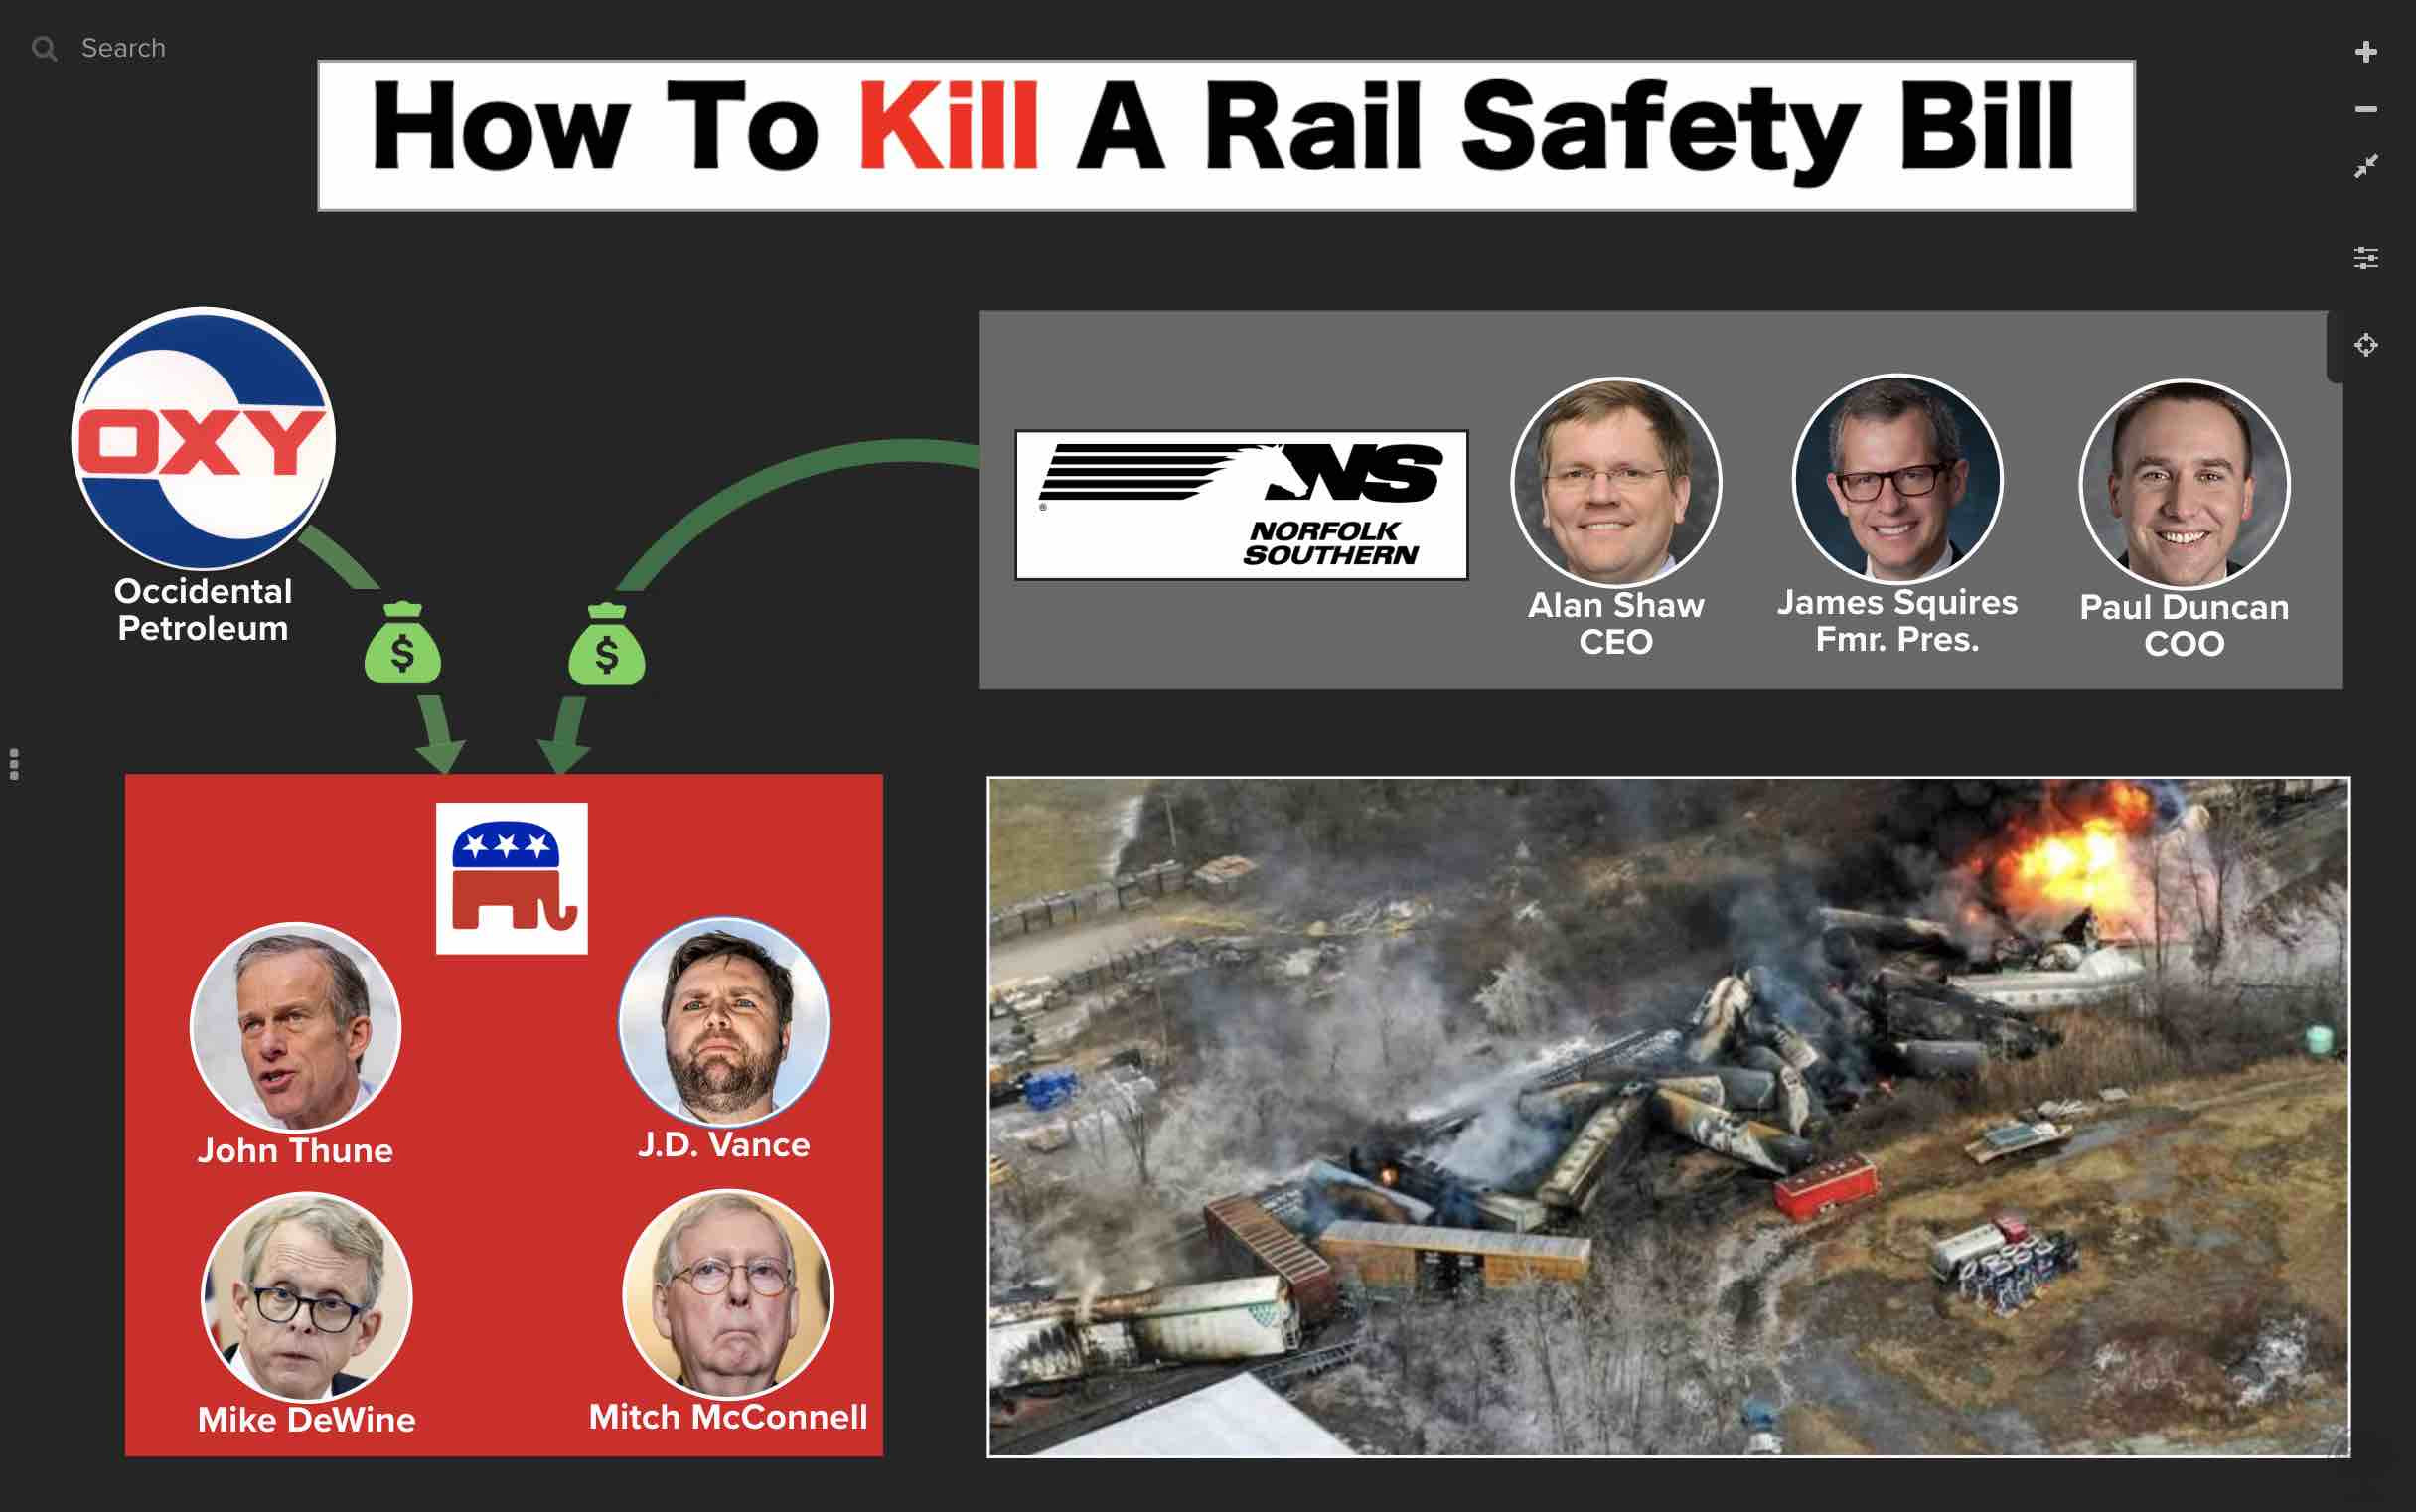 Dark money kills train safety bill